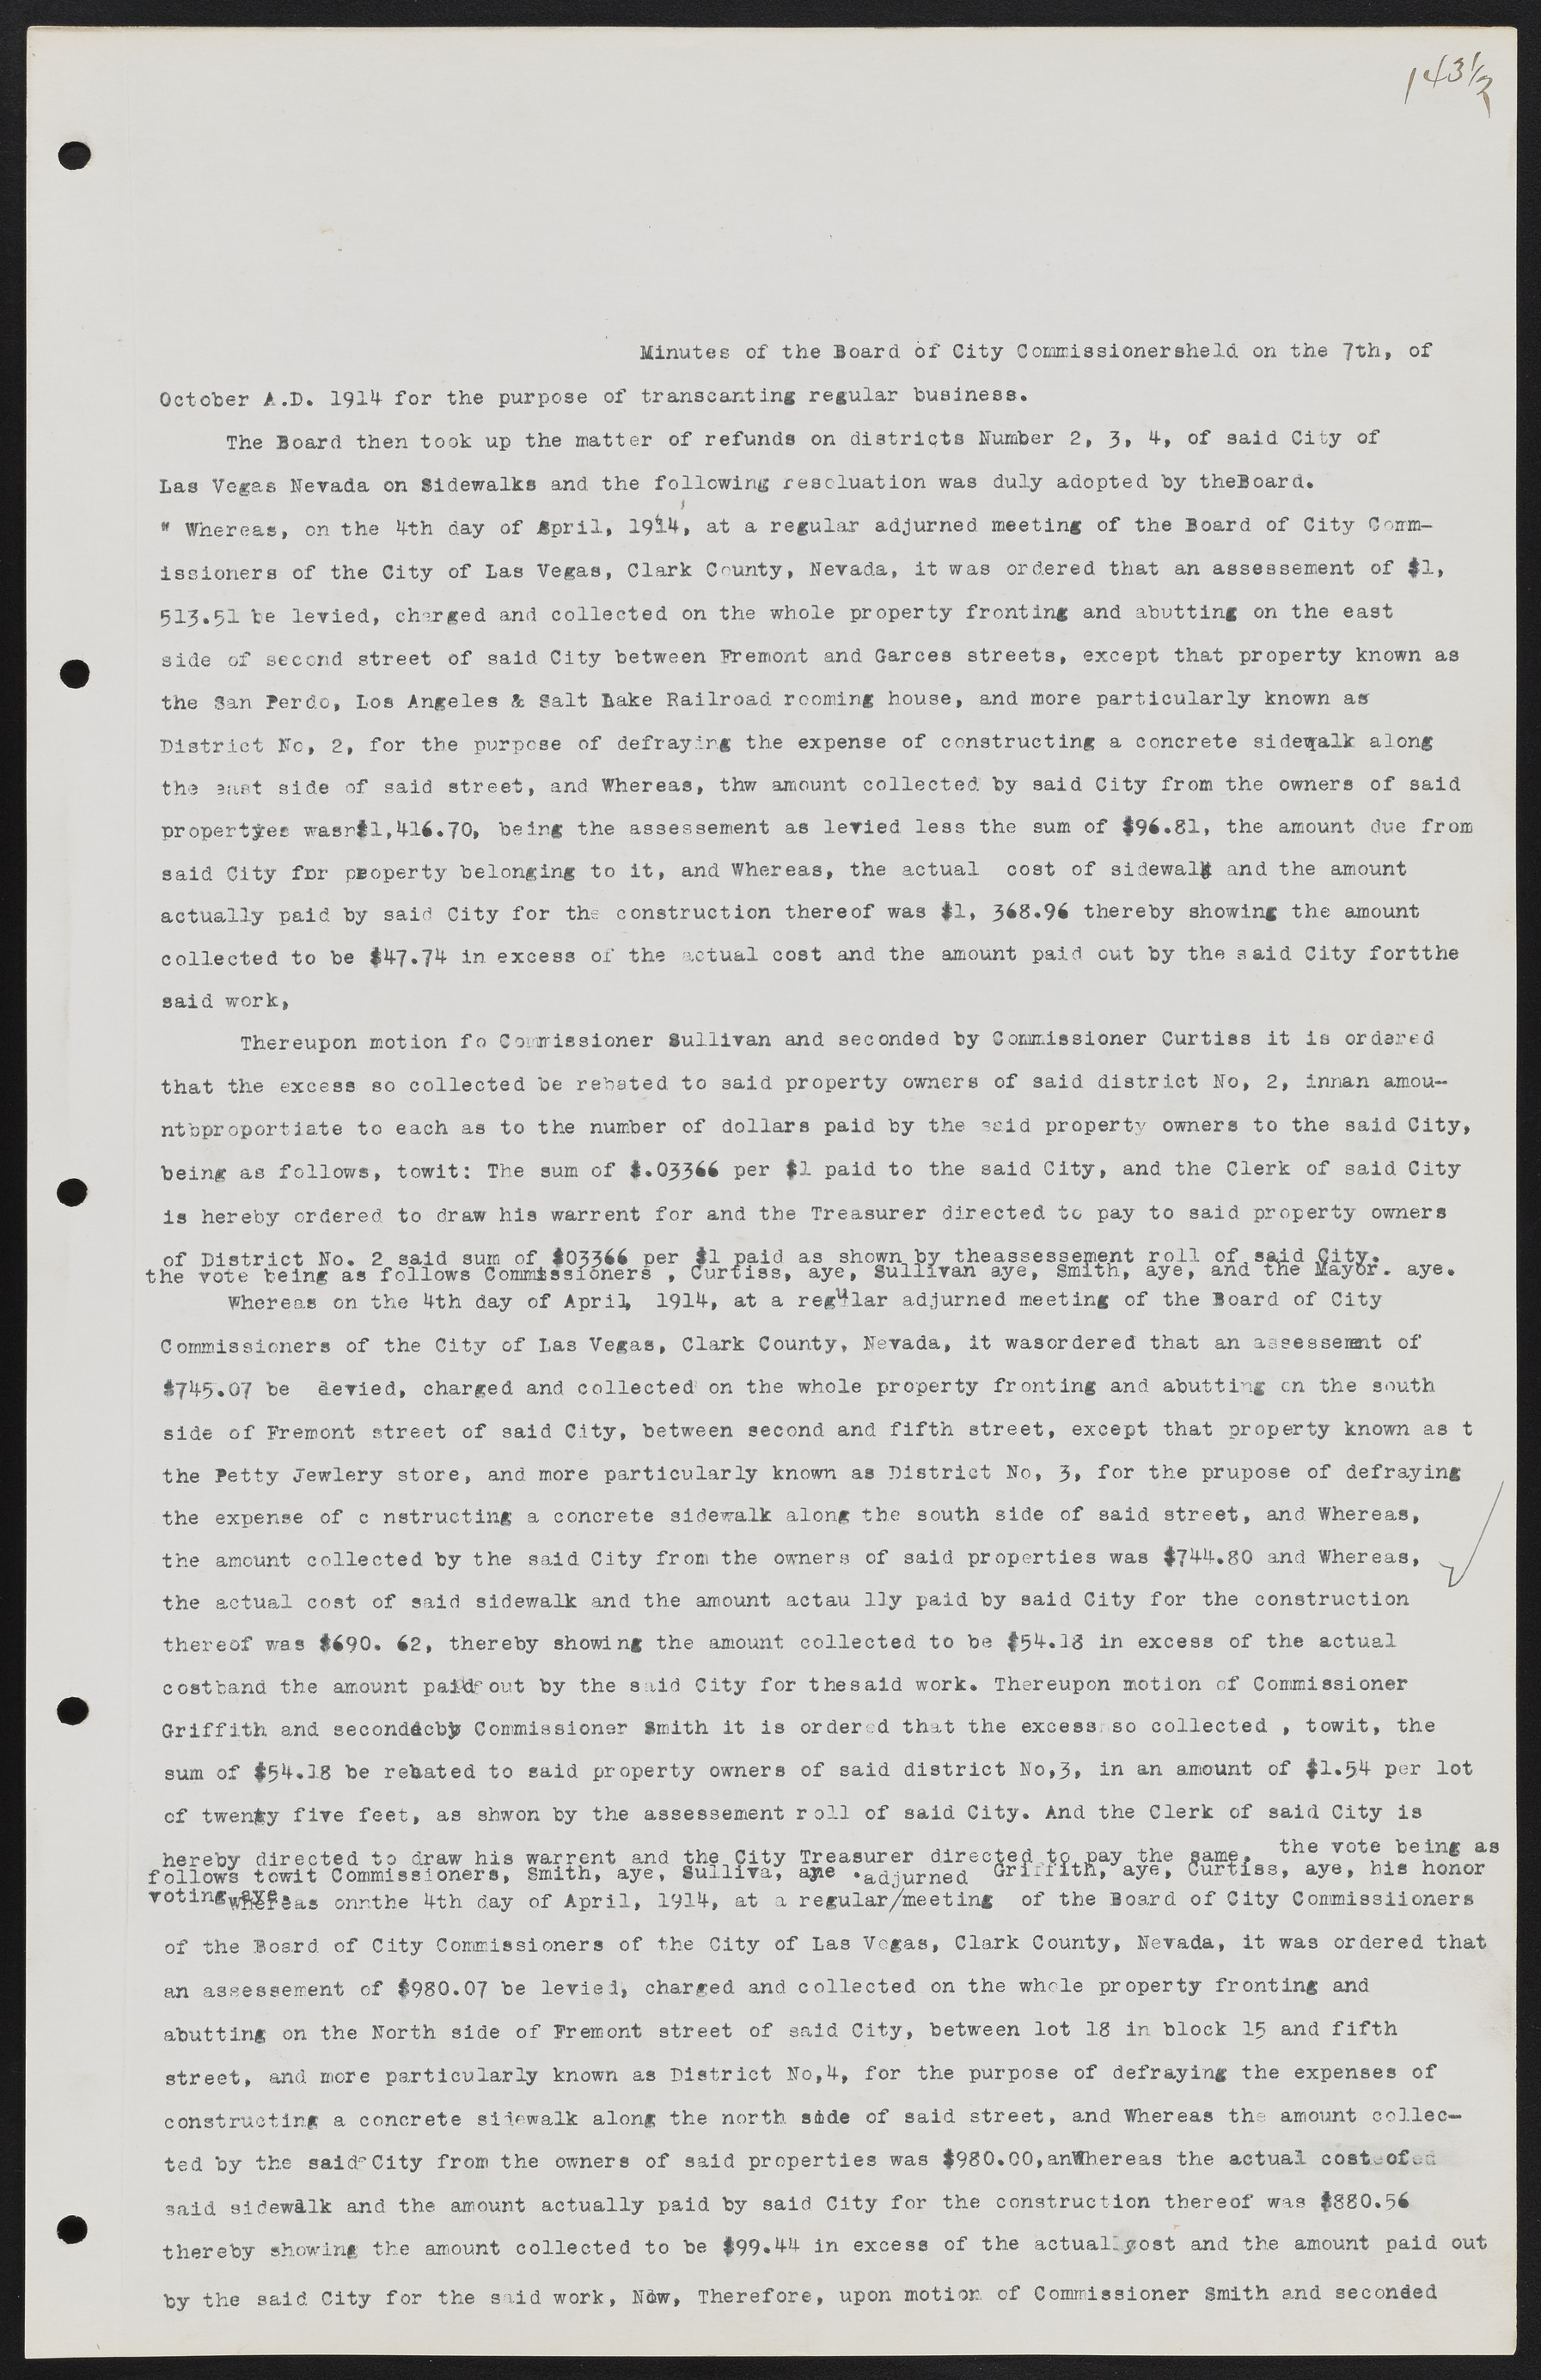 Las Vegas City Commission Minutes, June 22, 1911 to February 7, 1922, lvc000001-157